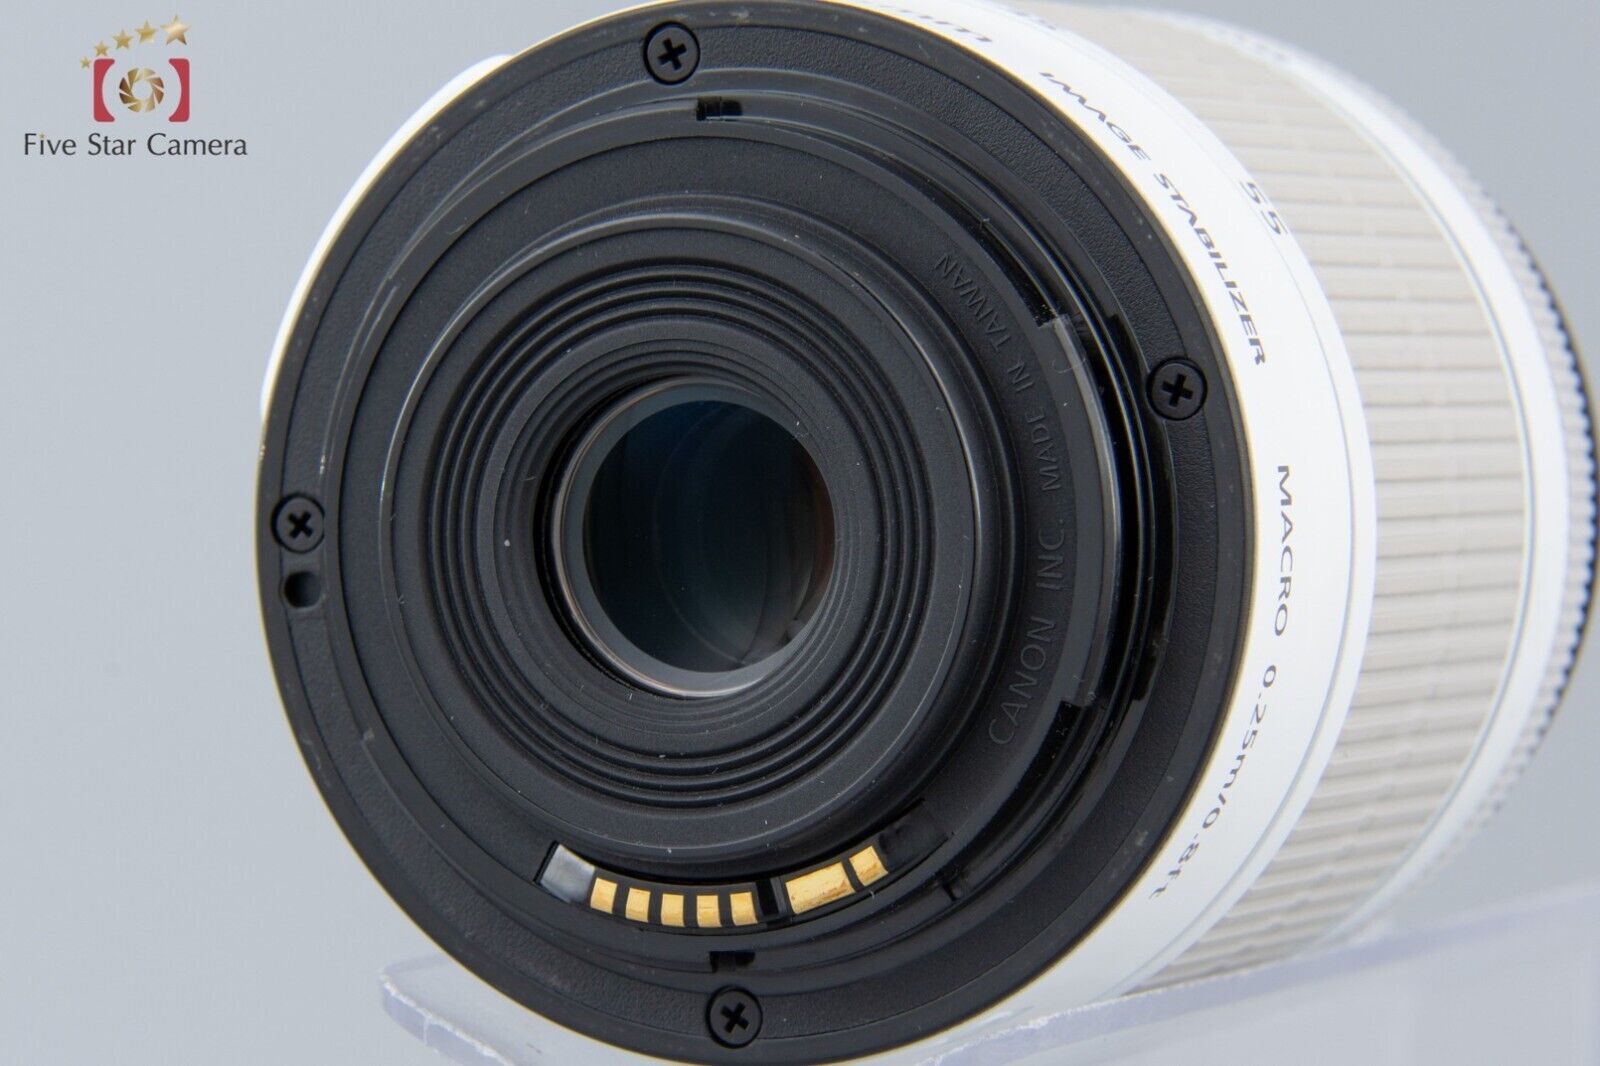 "Count 1,444" Canon EOS Kiss X7 / Rebel SL1 / 100D White 18.0 MP 18-55 40 Lenses